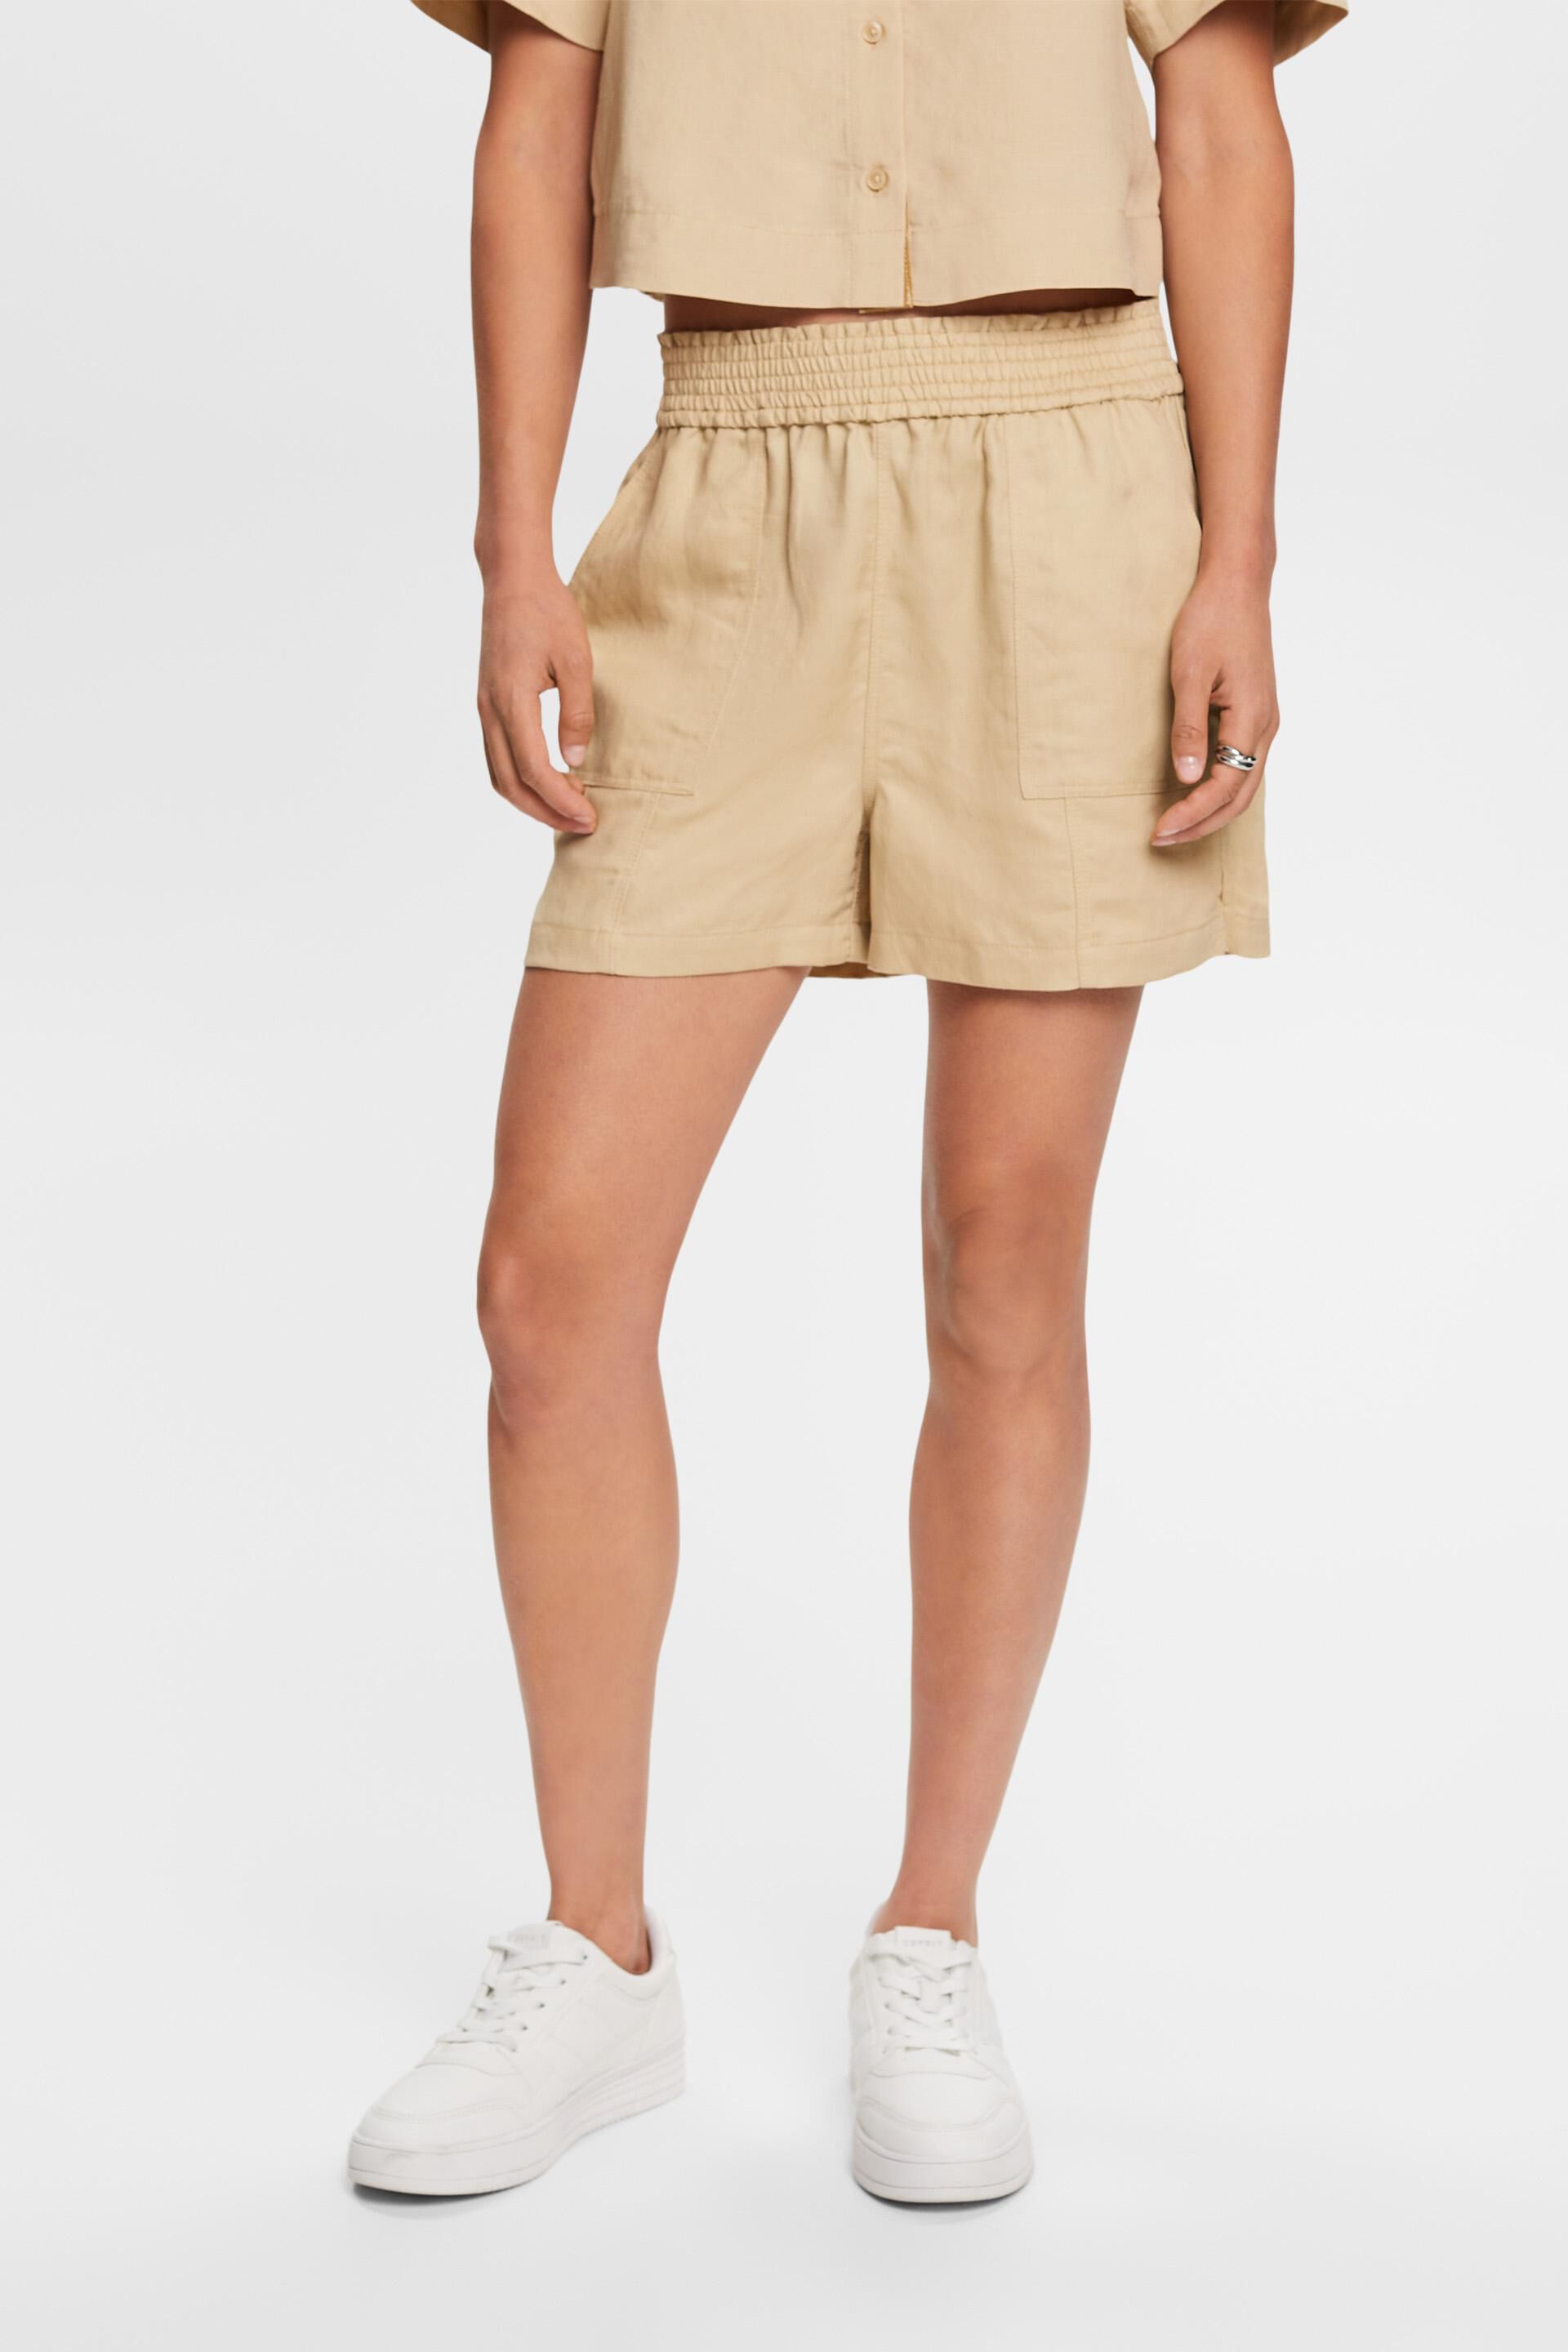 Esprit shorts, blend linen Pull-on